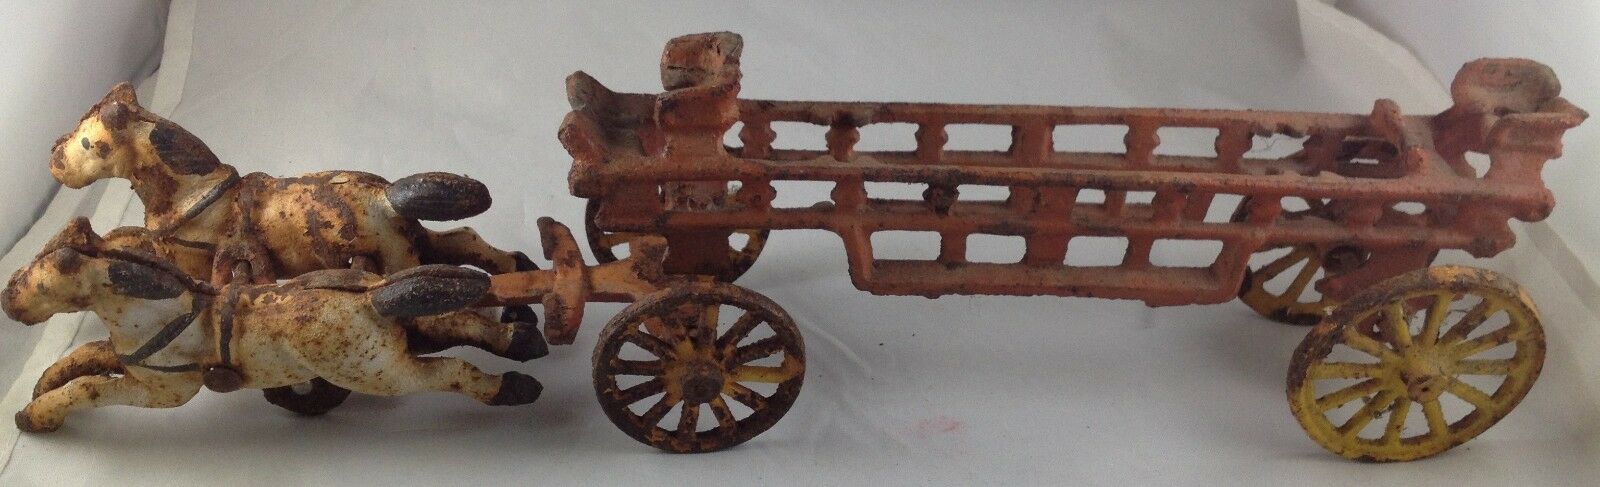 Vintage Cast Iron Horse Drawn Firetruck Toy Wagon Fire Engine Ladder Truck